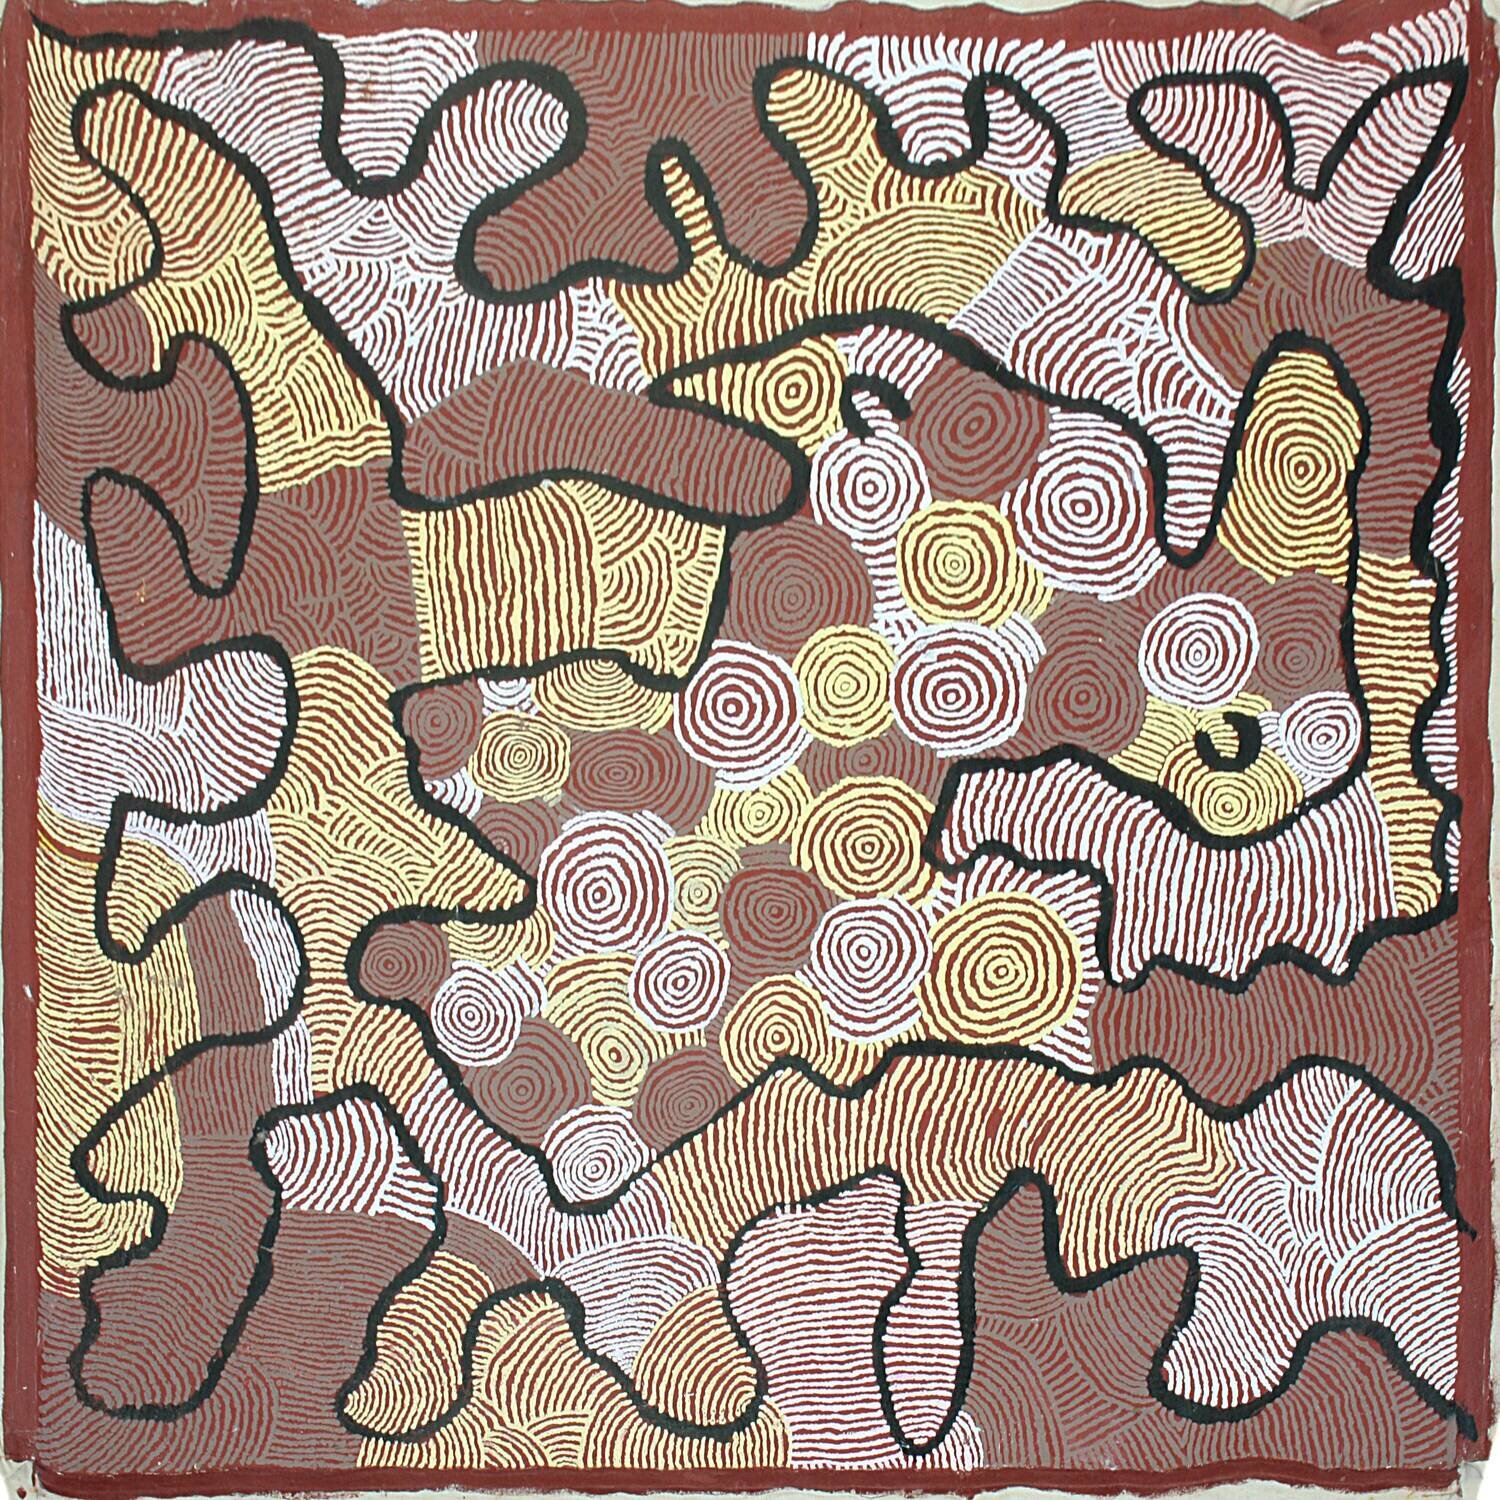 Tjilkamarta Tjakarrpa, 2007 by Dorothy Ward
152x152cm Catalogue 13025DW